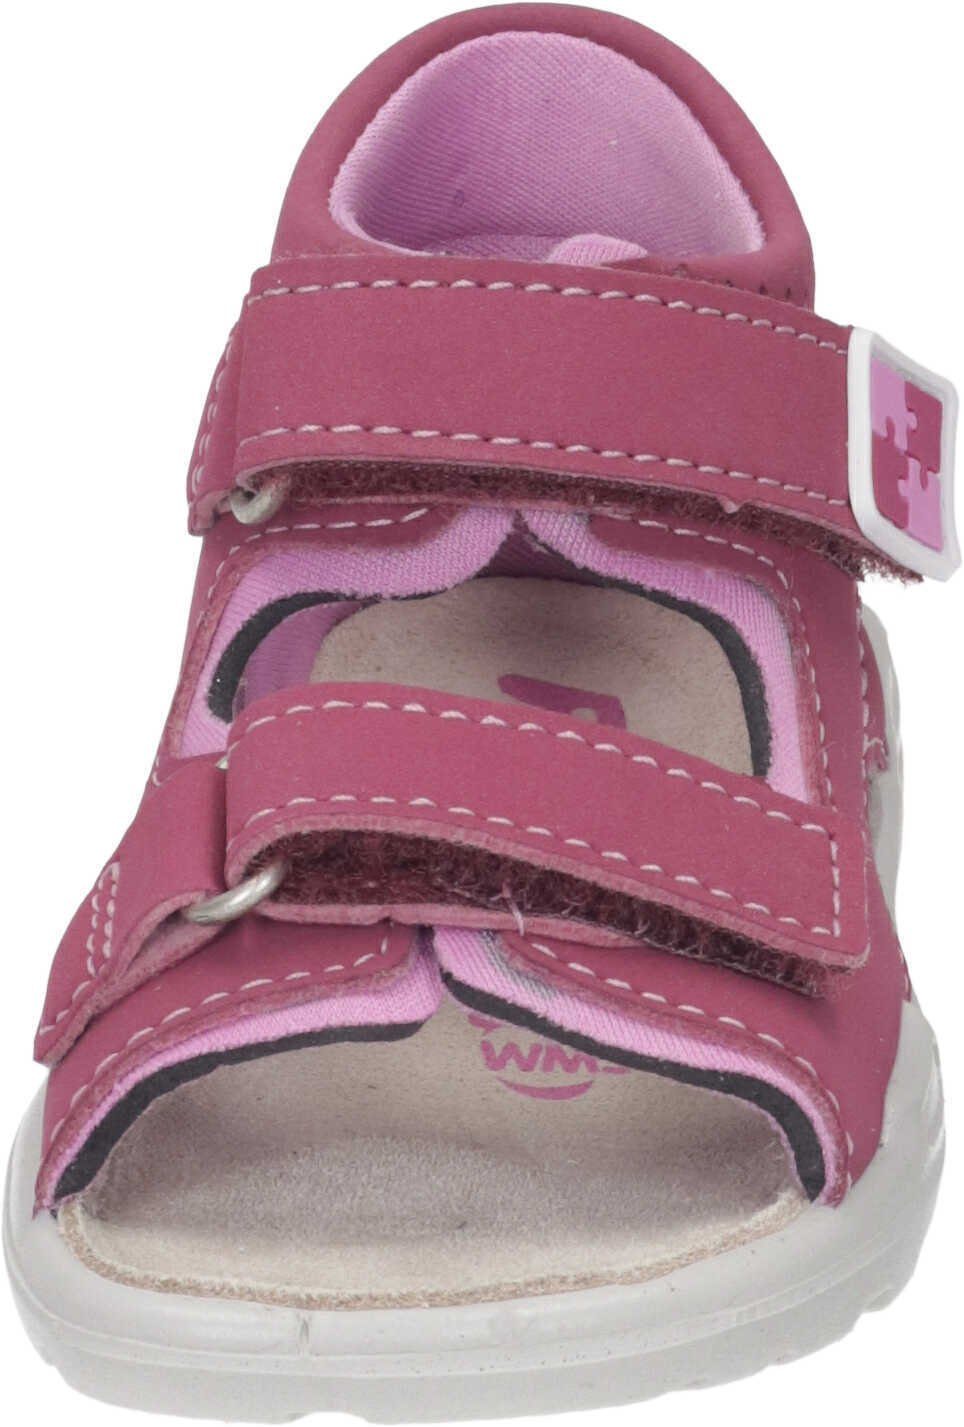 aus Ricosta Sandaletten Textil pink Outdoorsandale Pepino